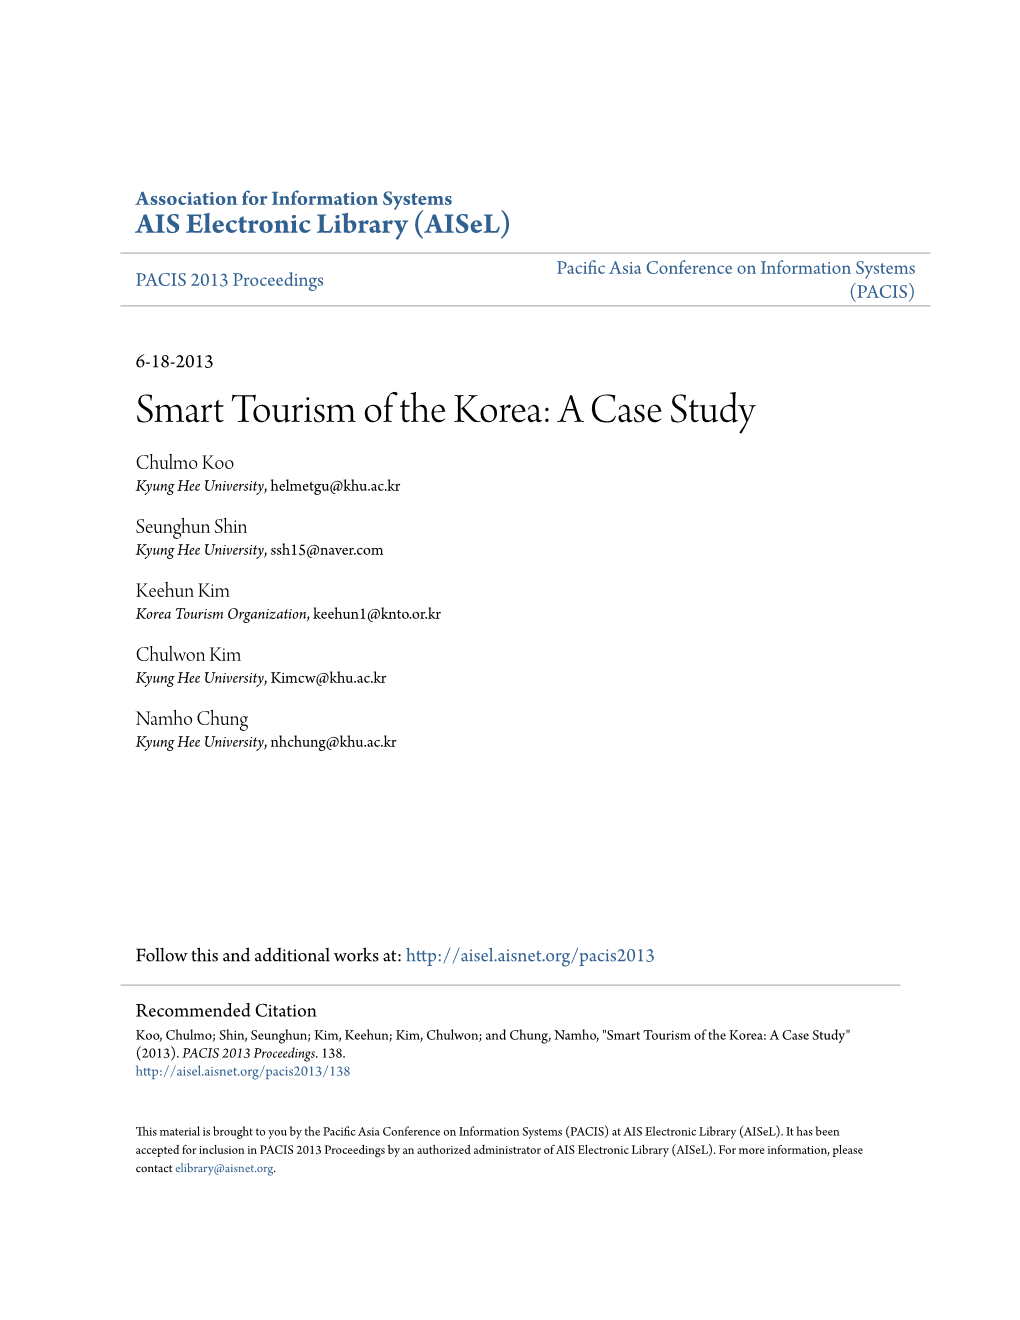 Smart Tourism of the Korea: a Case Study Chulmo Koo Kyung Hee University, Helmetgu@Khu.Ac.Kr